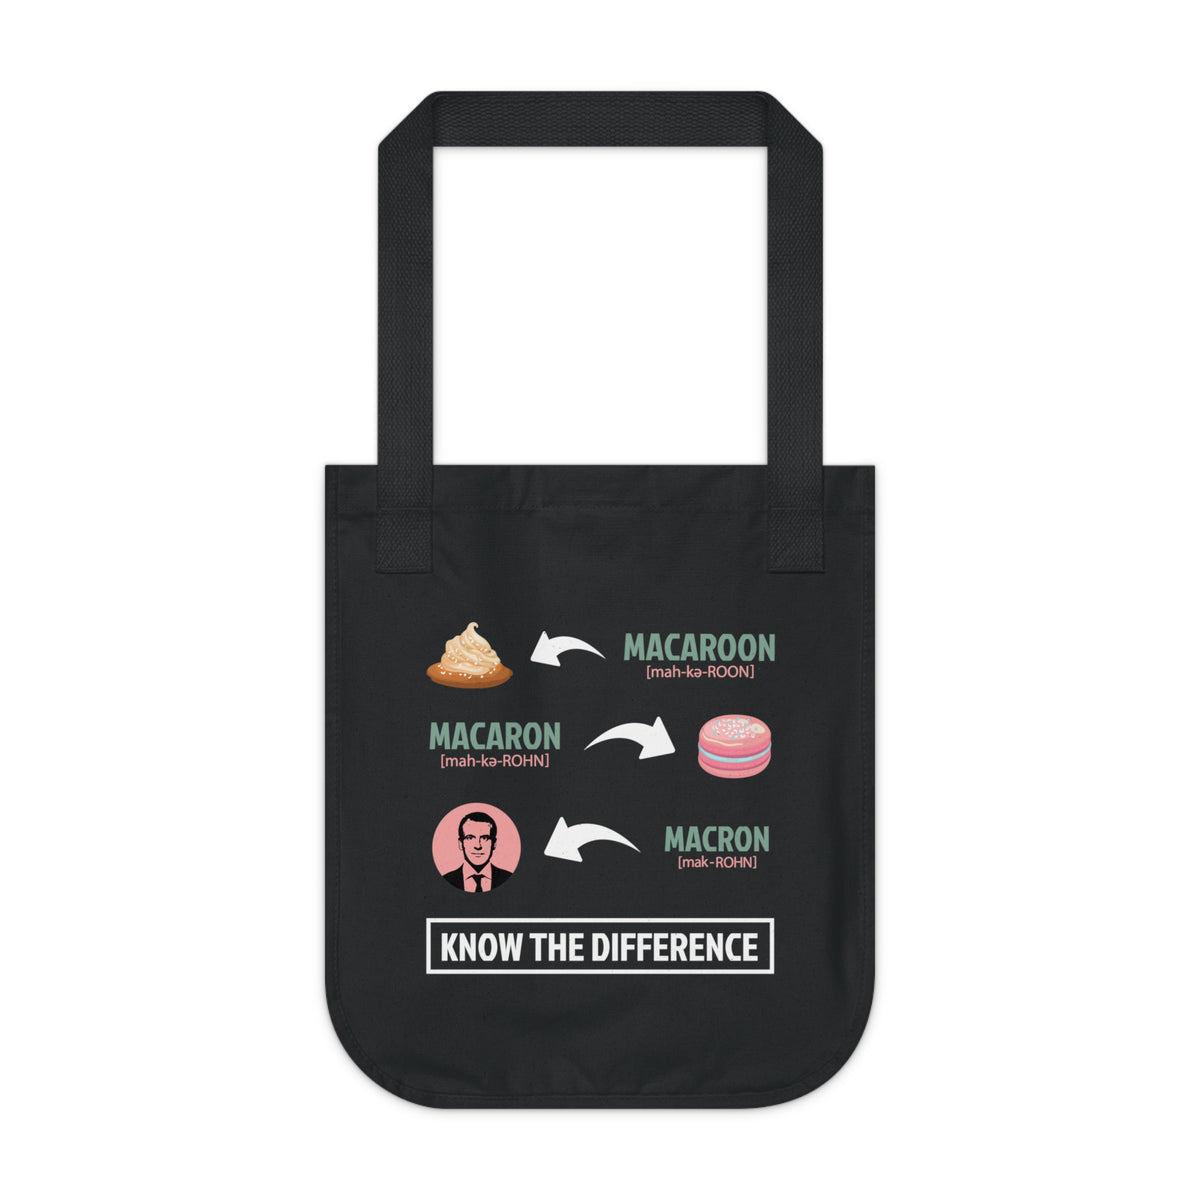 Macaron Macaroon Macron Funny Tote Bag | Cookie Baking Gift | Organic Canvas Tote Bag